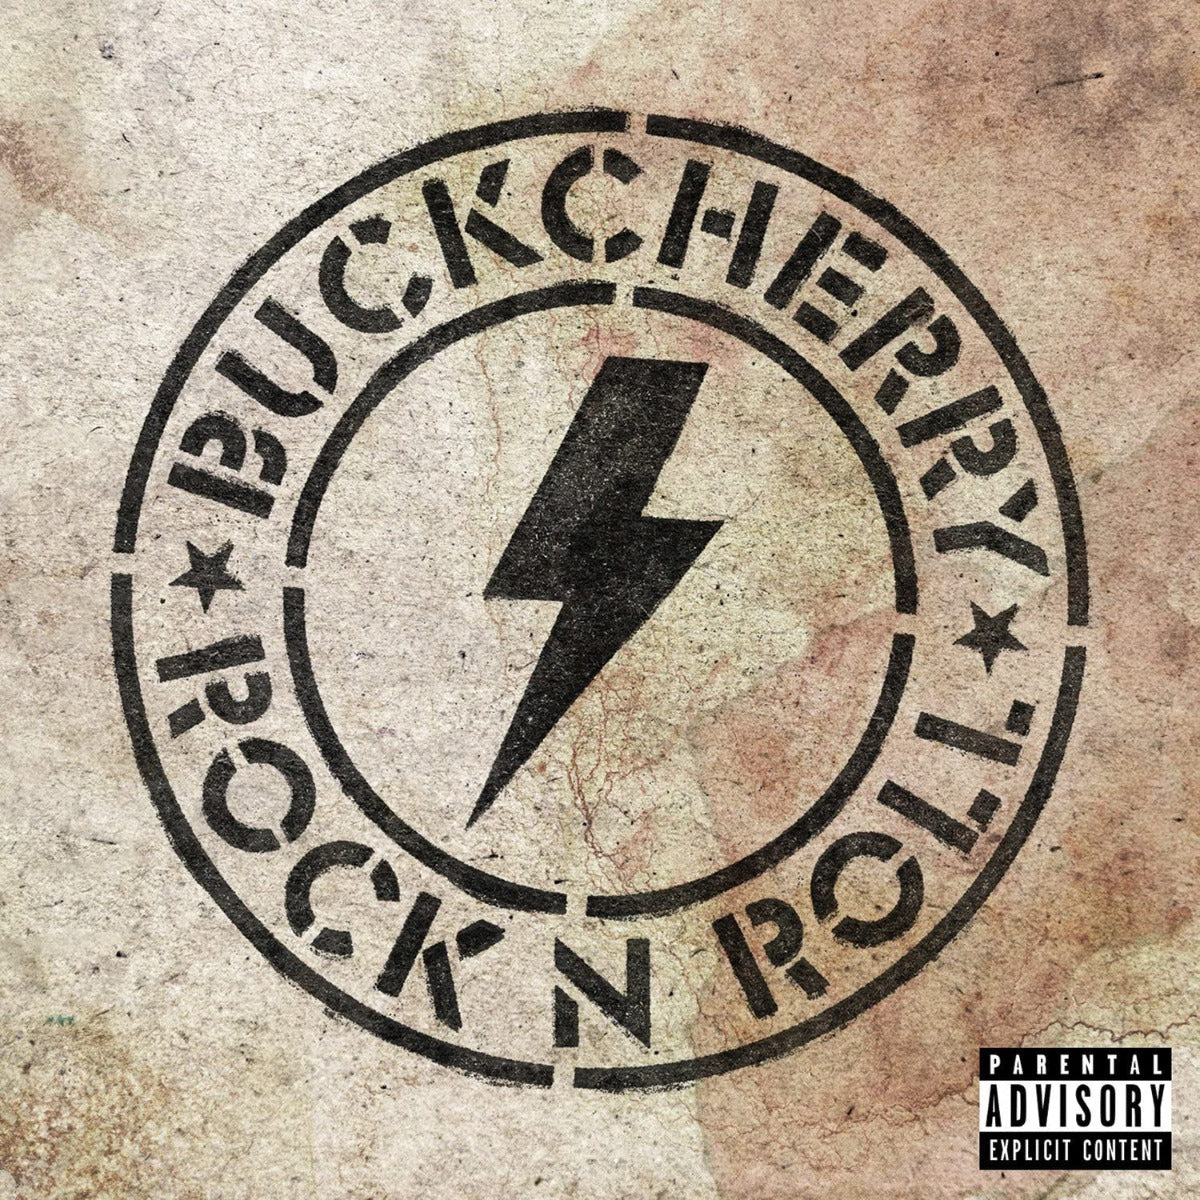 Buckcherry - Rock N Roll (Cherry Red Color Vinyl) - Joco Records